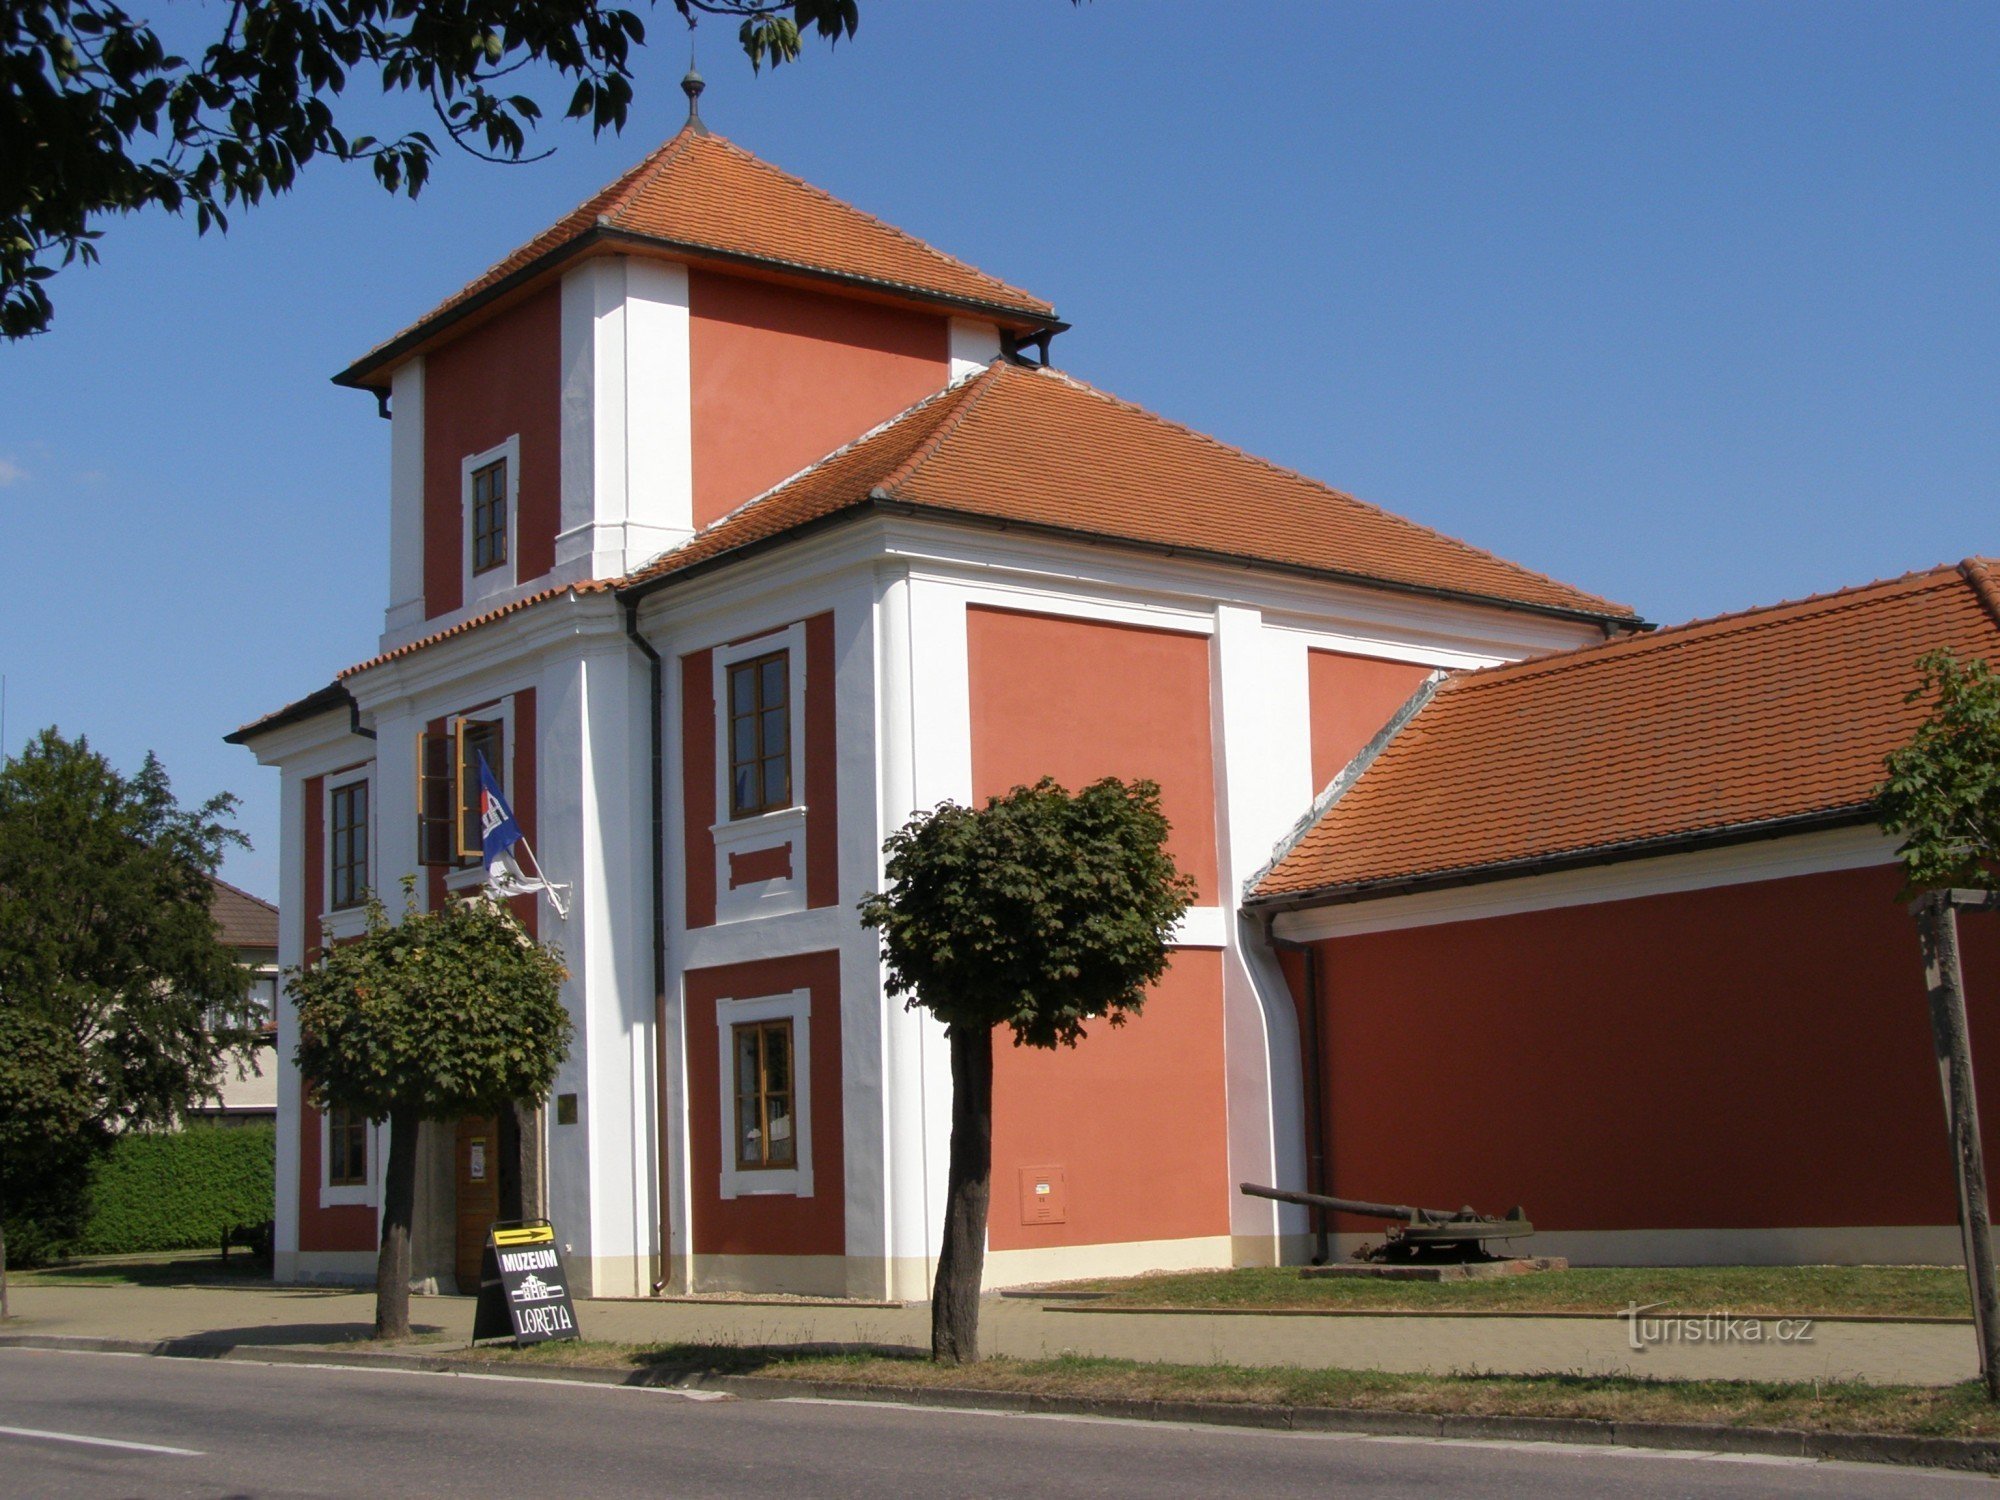 Chlumec nad Cidlinou - Loreta, μουσείο πόλης